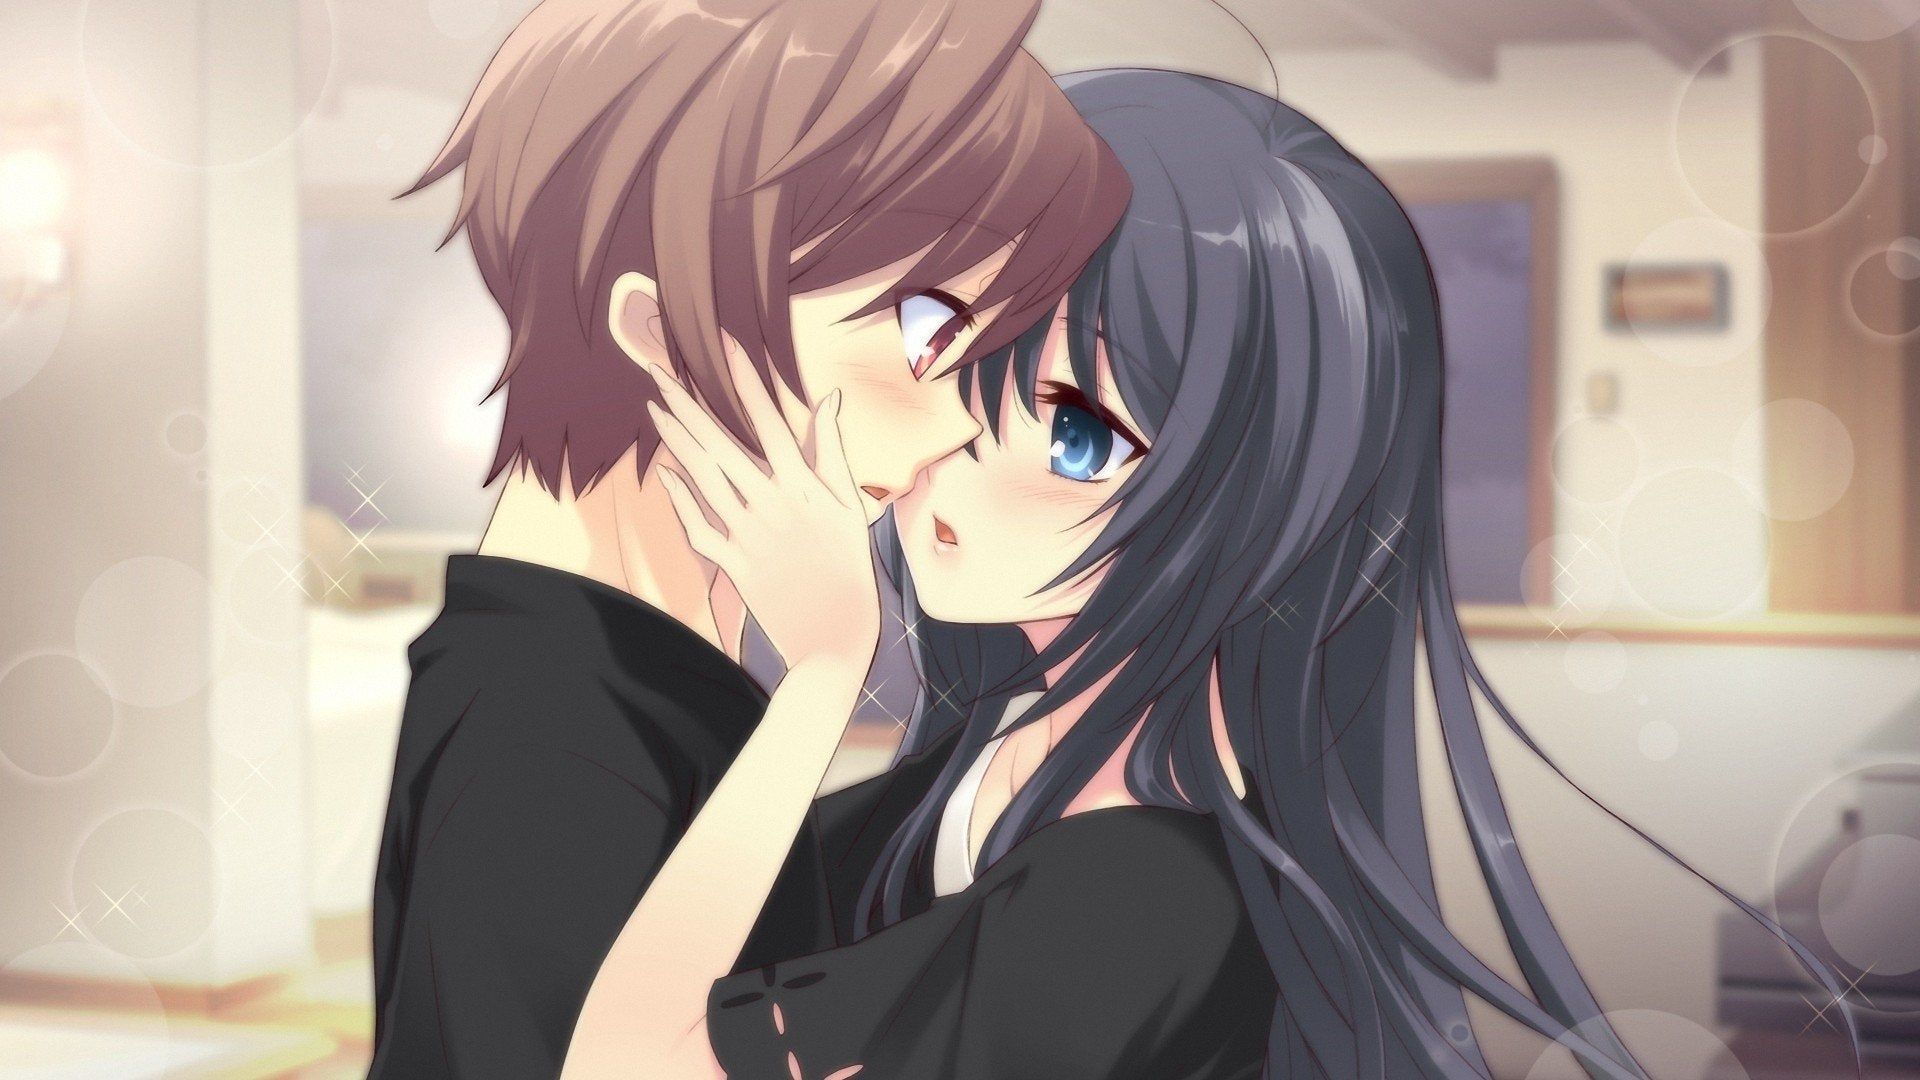 Cute Anime Couple Kiss Wallpaper [1920x1080]: Animewallpaper